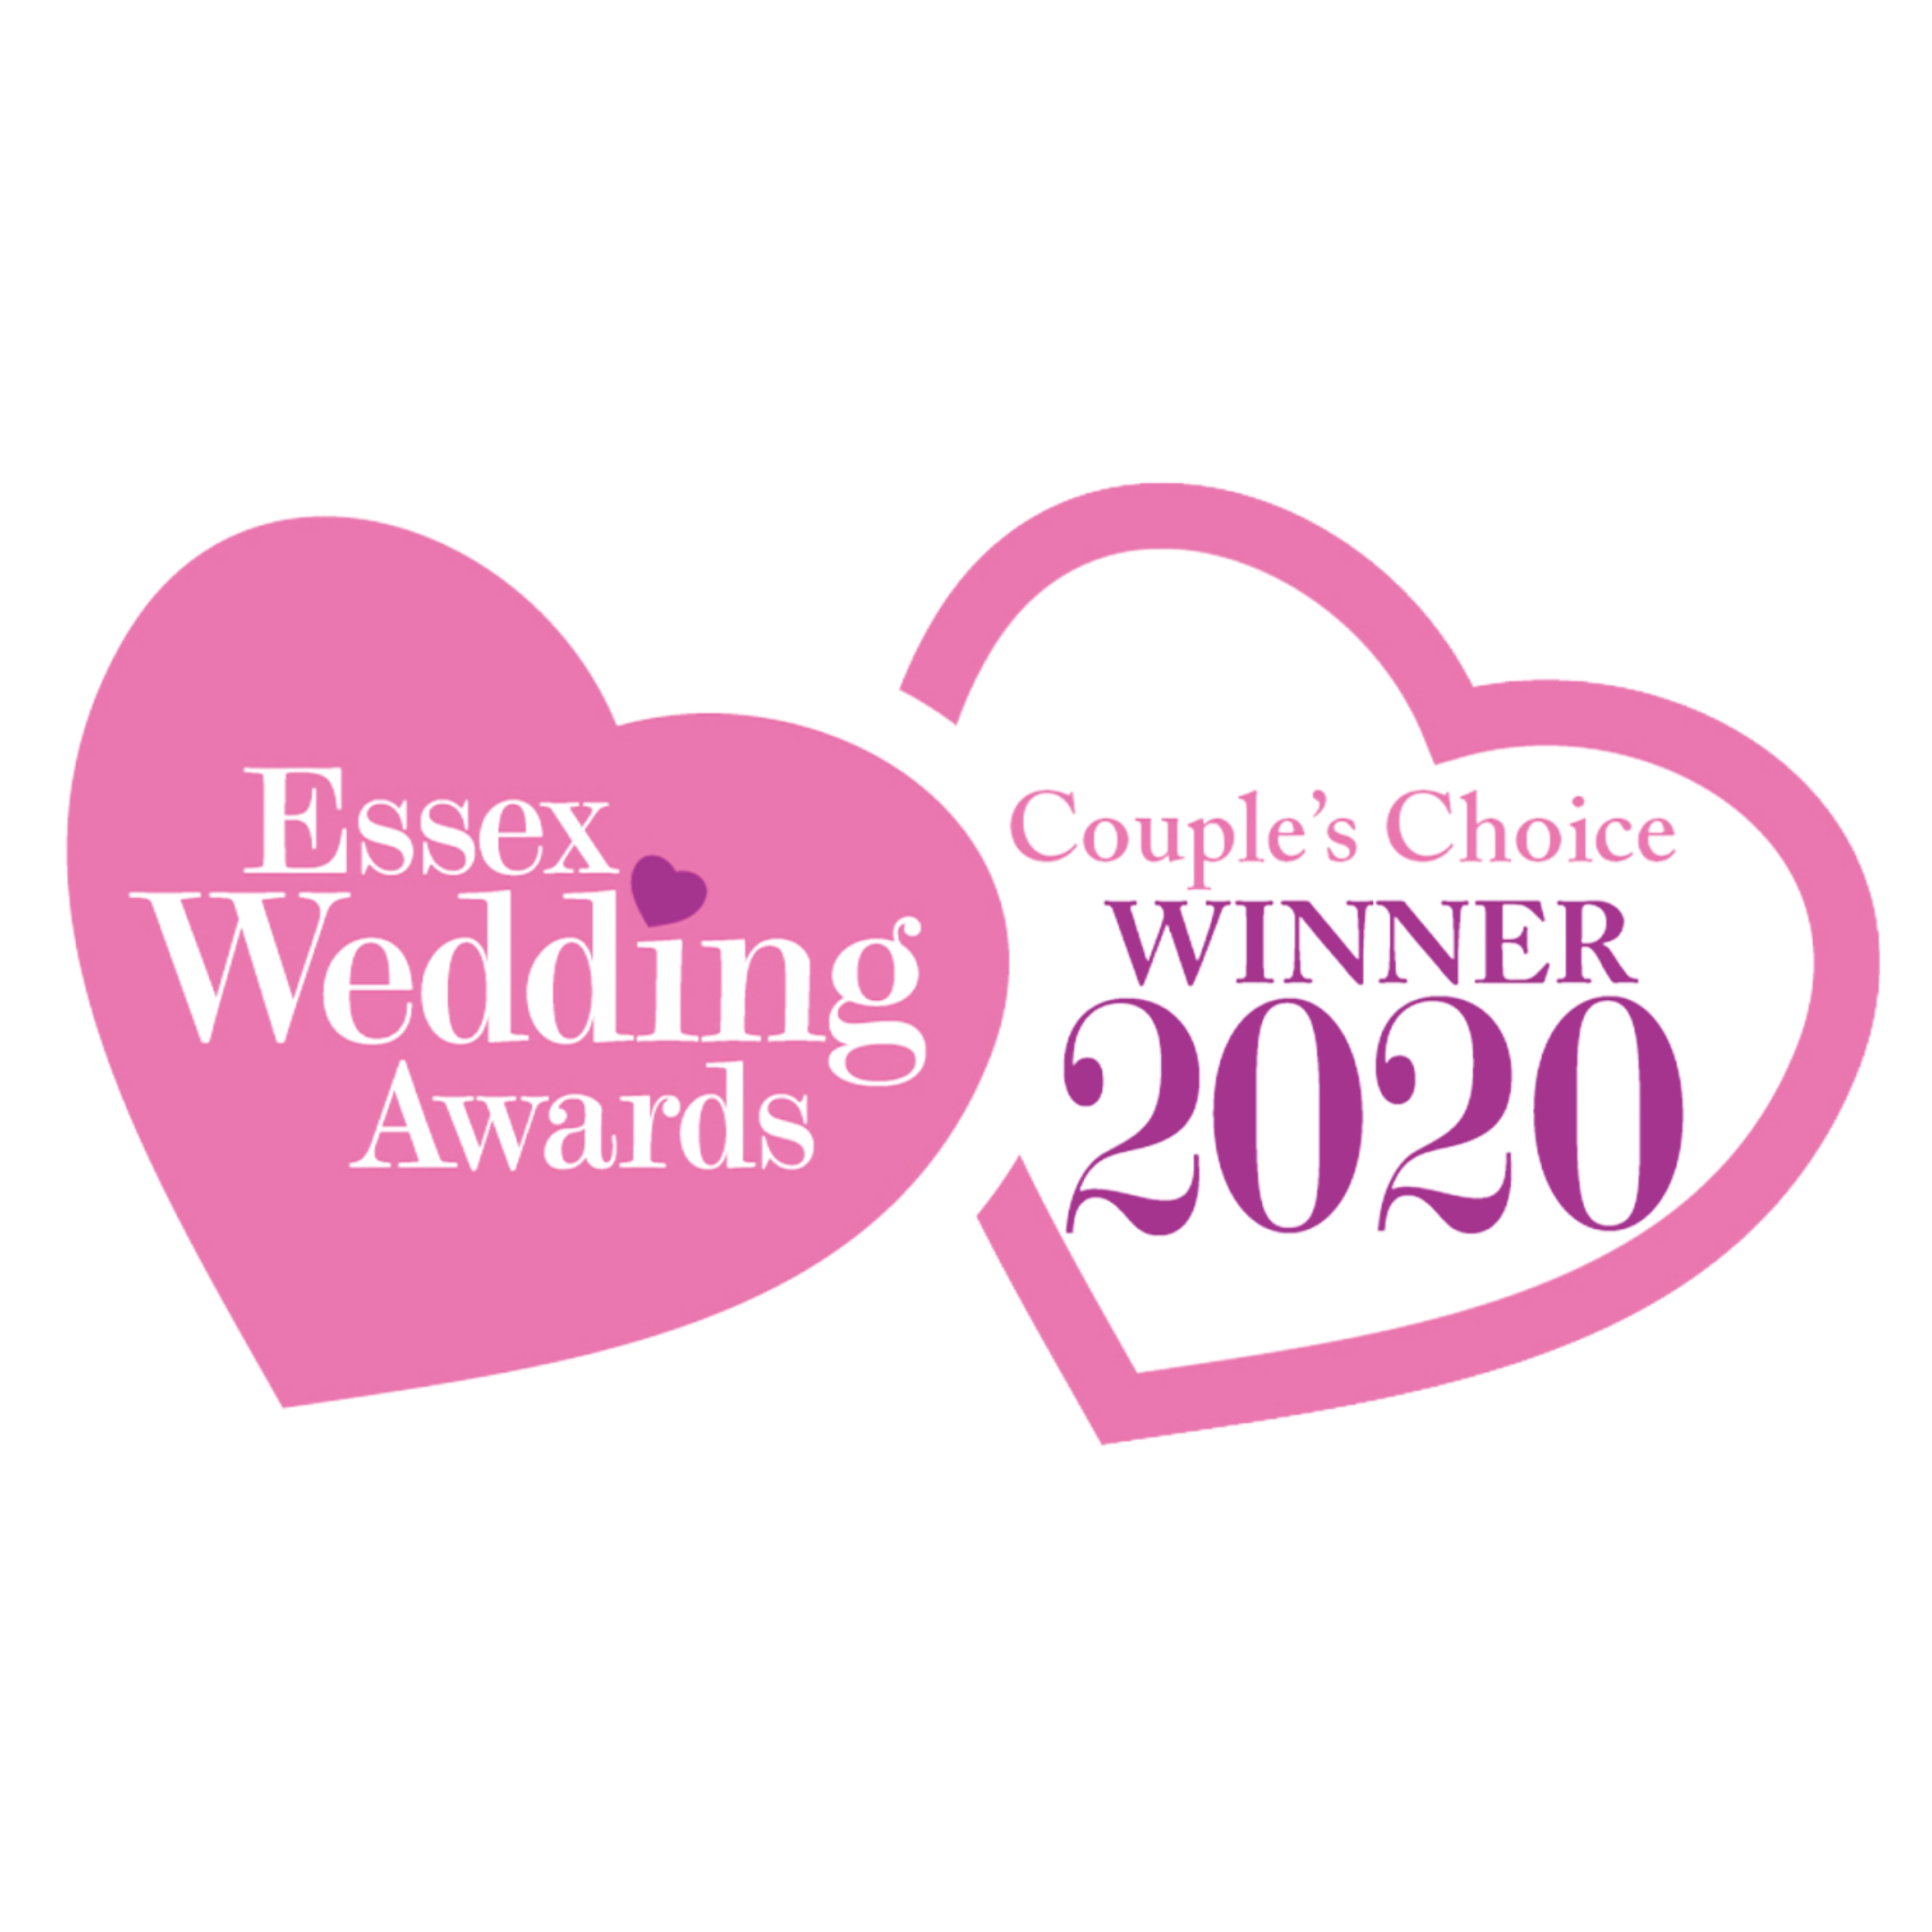 Multiway Bridesmaid Dresses Essex Wedding Awards Couple's Choice Winner 2020